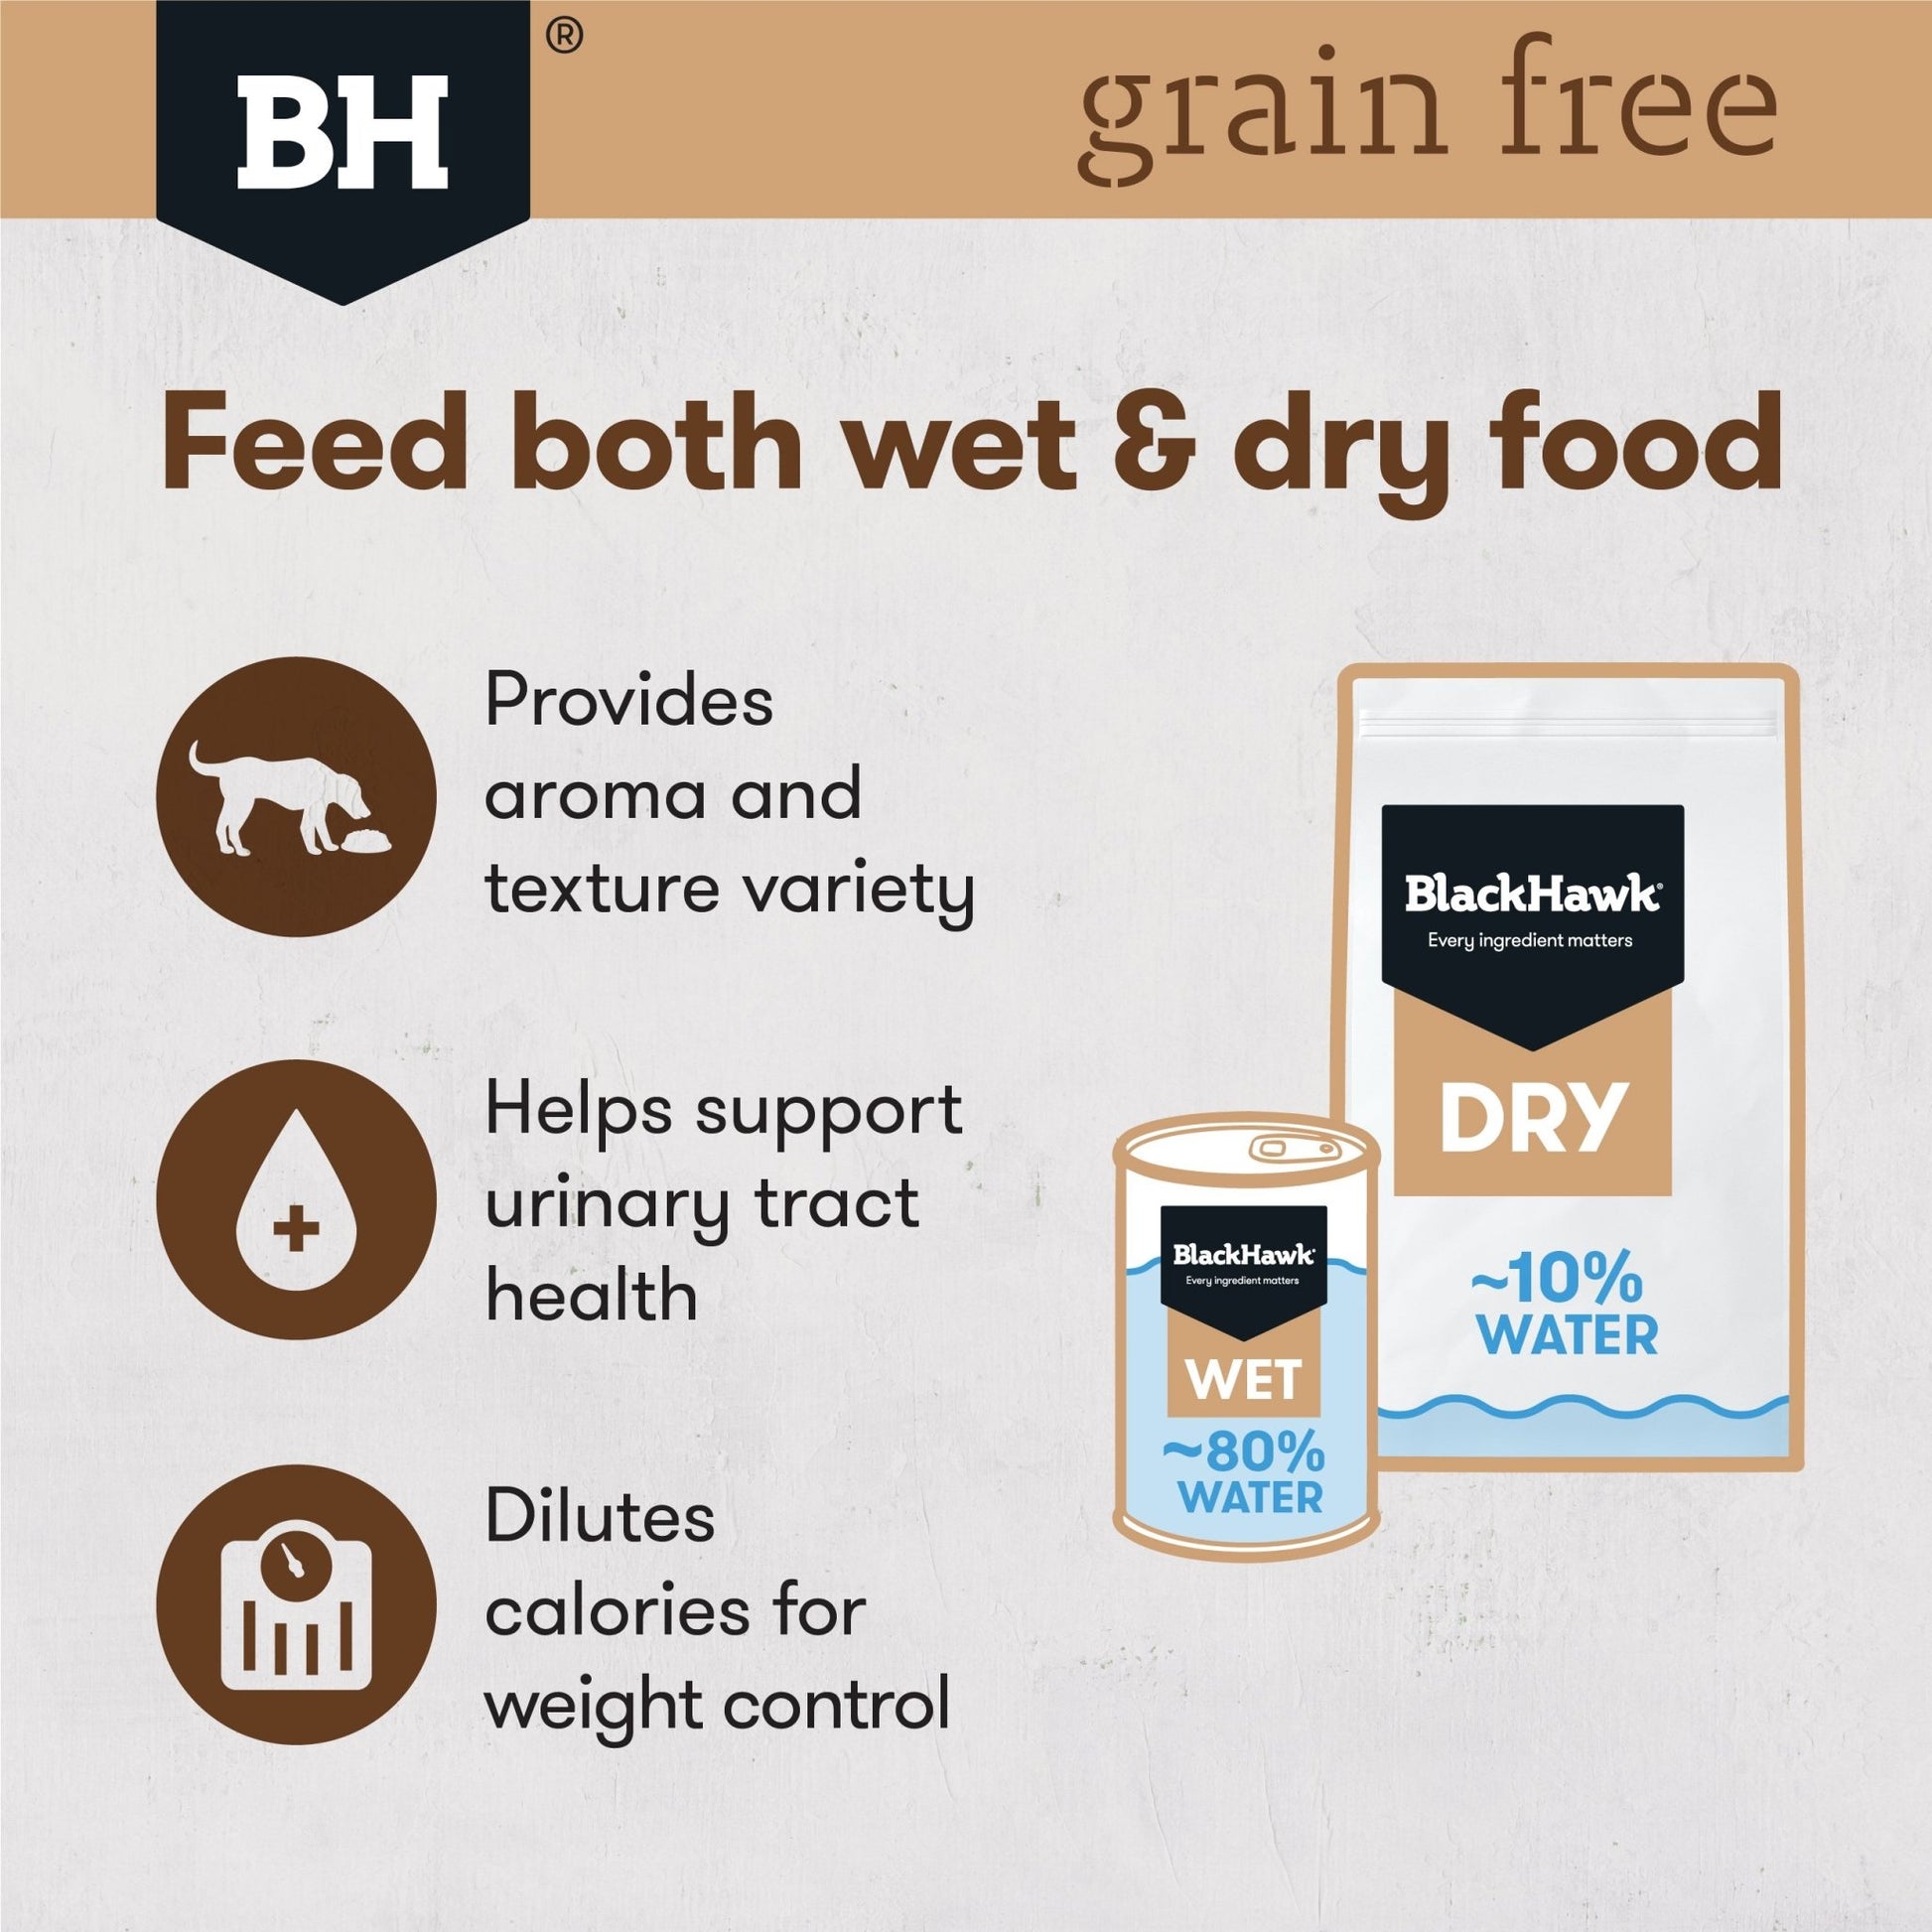 Black Hawk Grain Free Wet Dog Food 400g Beef - Woonona Petfood & Produce